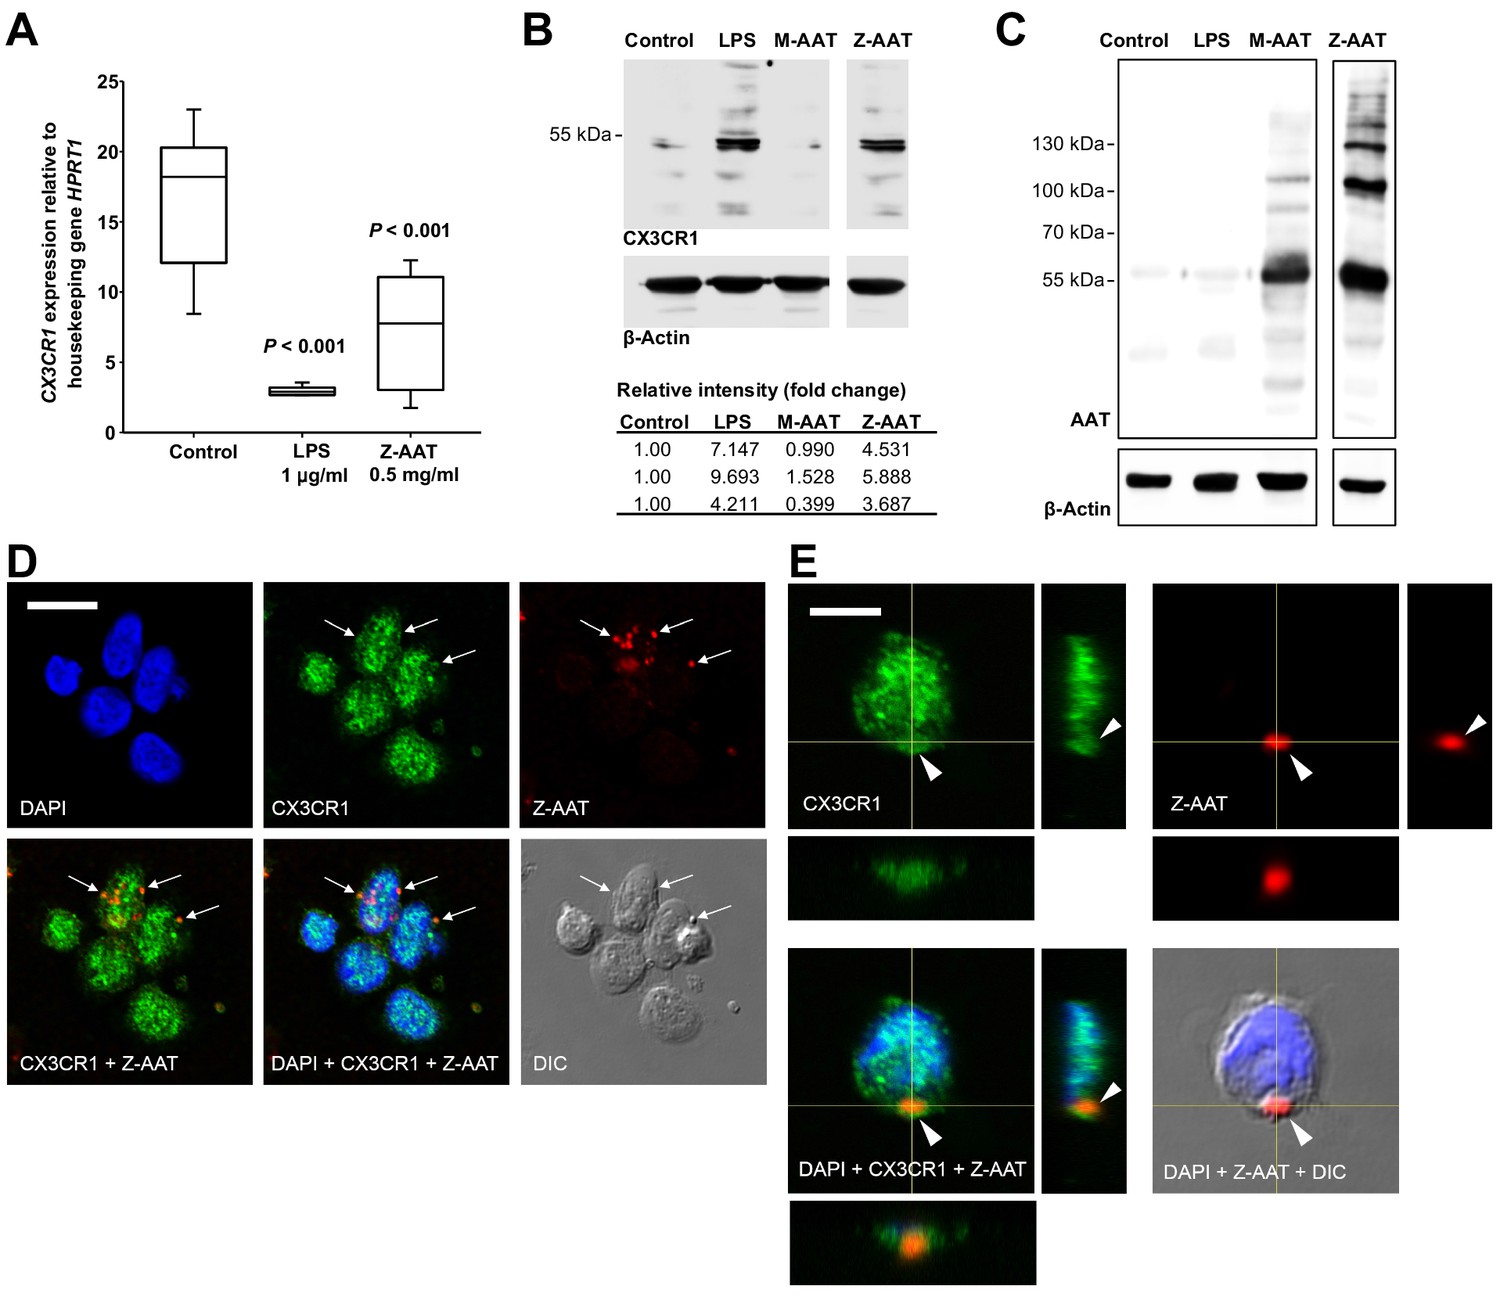 Figures in Polymerization of misfolded Z alpha-1 antitrypsin protein CX3CR1 expression in PBMCs | eLife